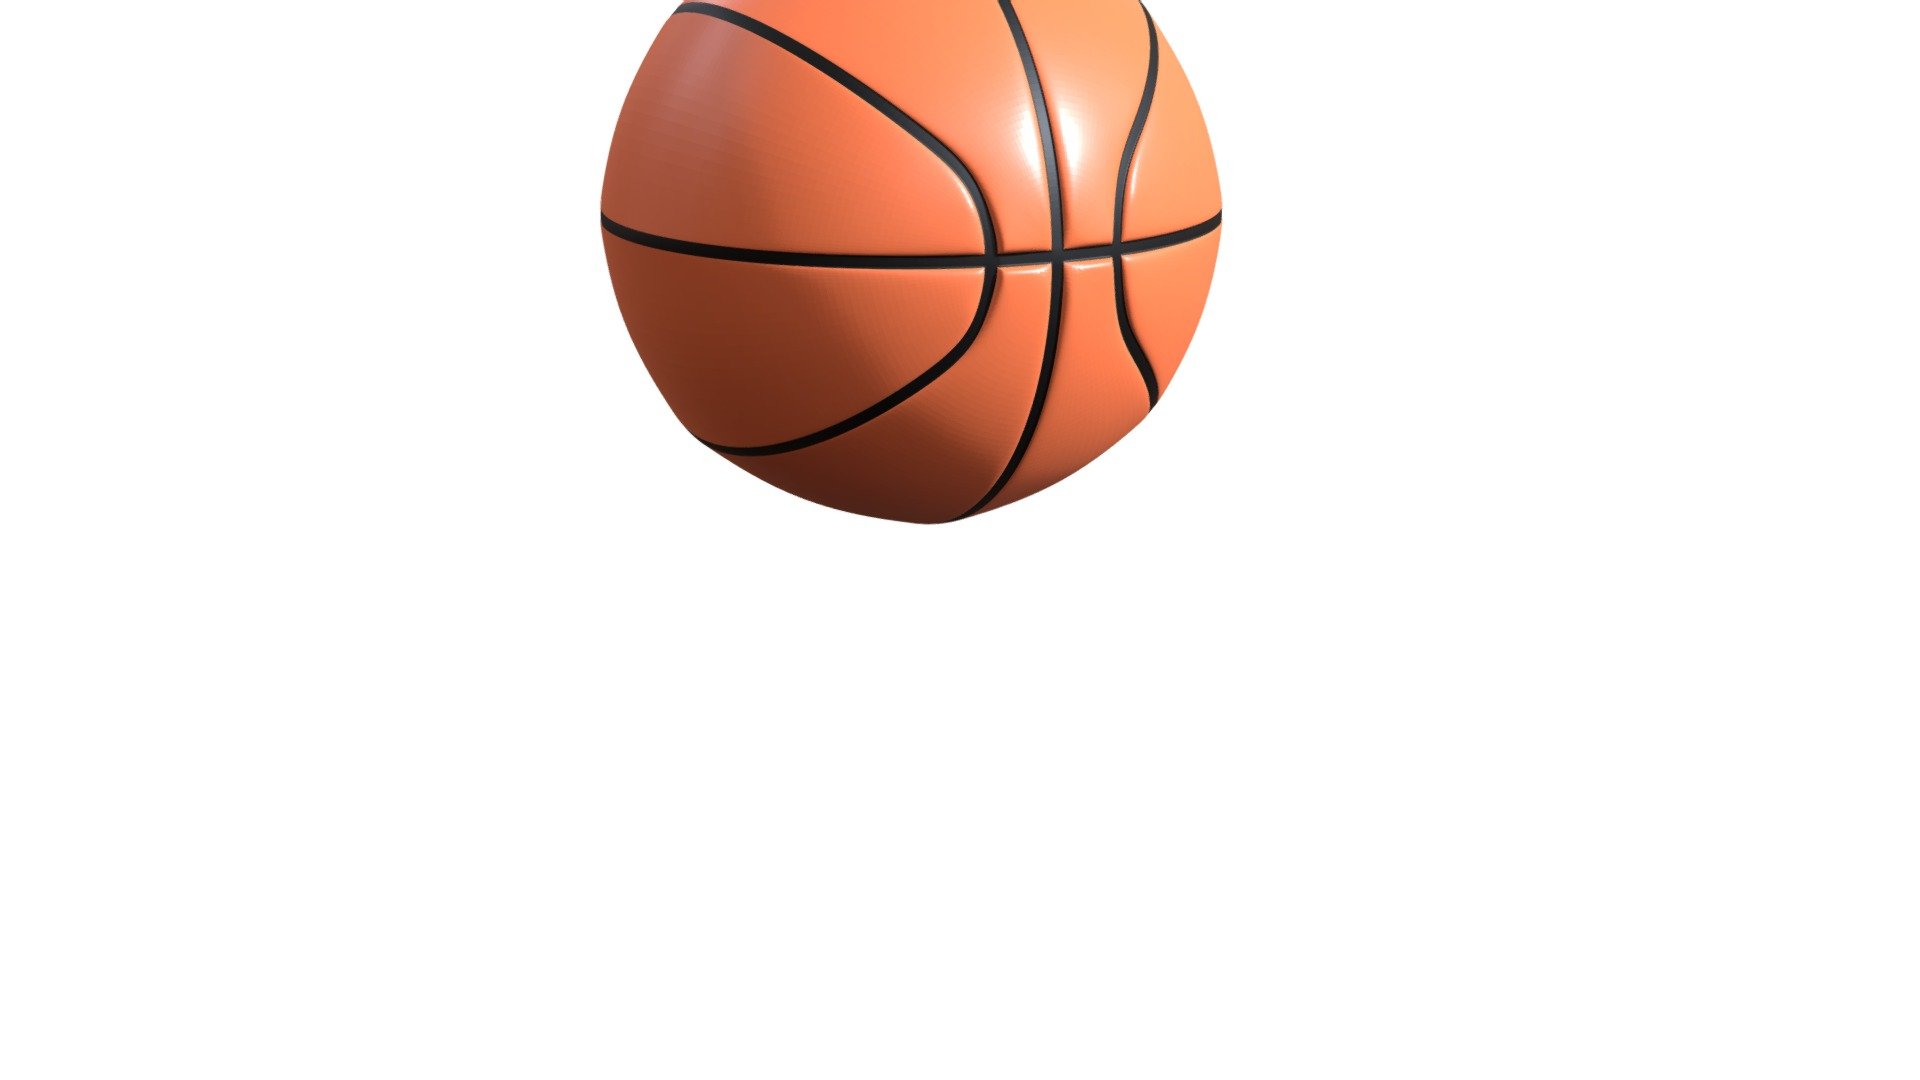 Balon de Baloncesto 1 - Download Free 3D model by atukeproductions  (@atukeproductions) [ed82628]